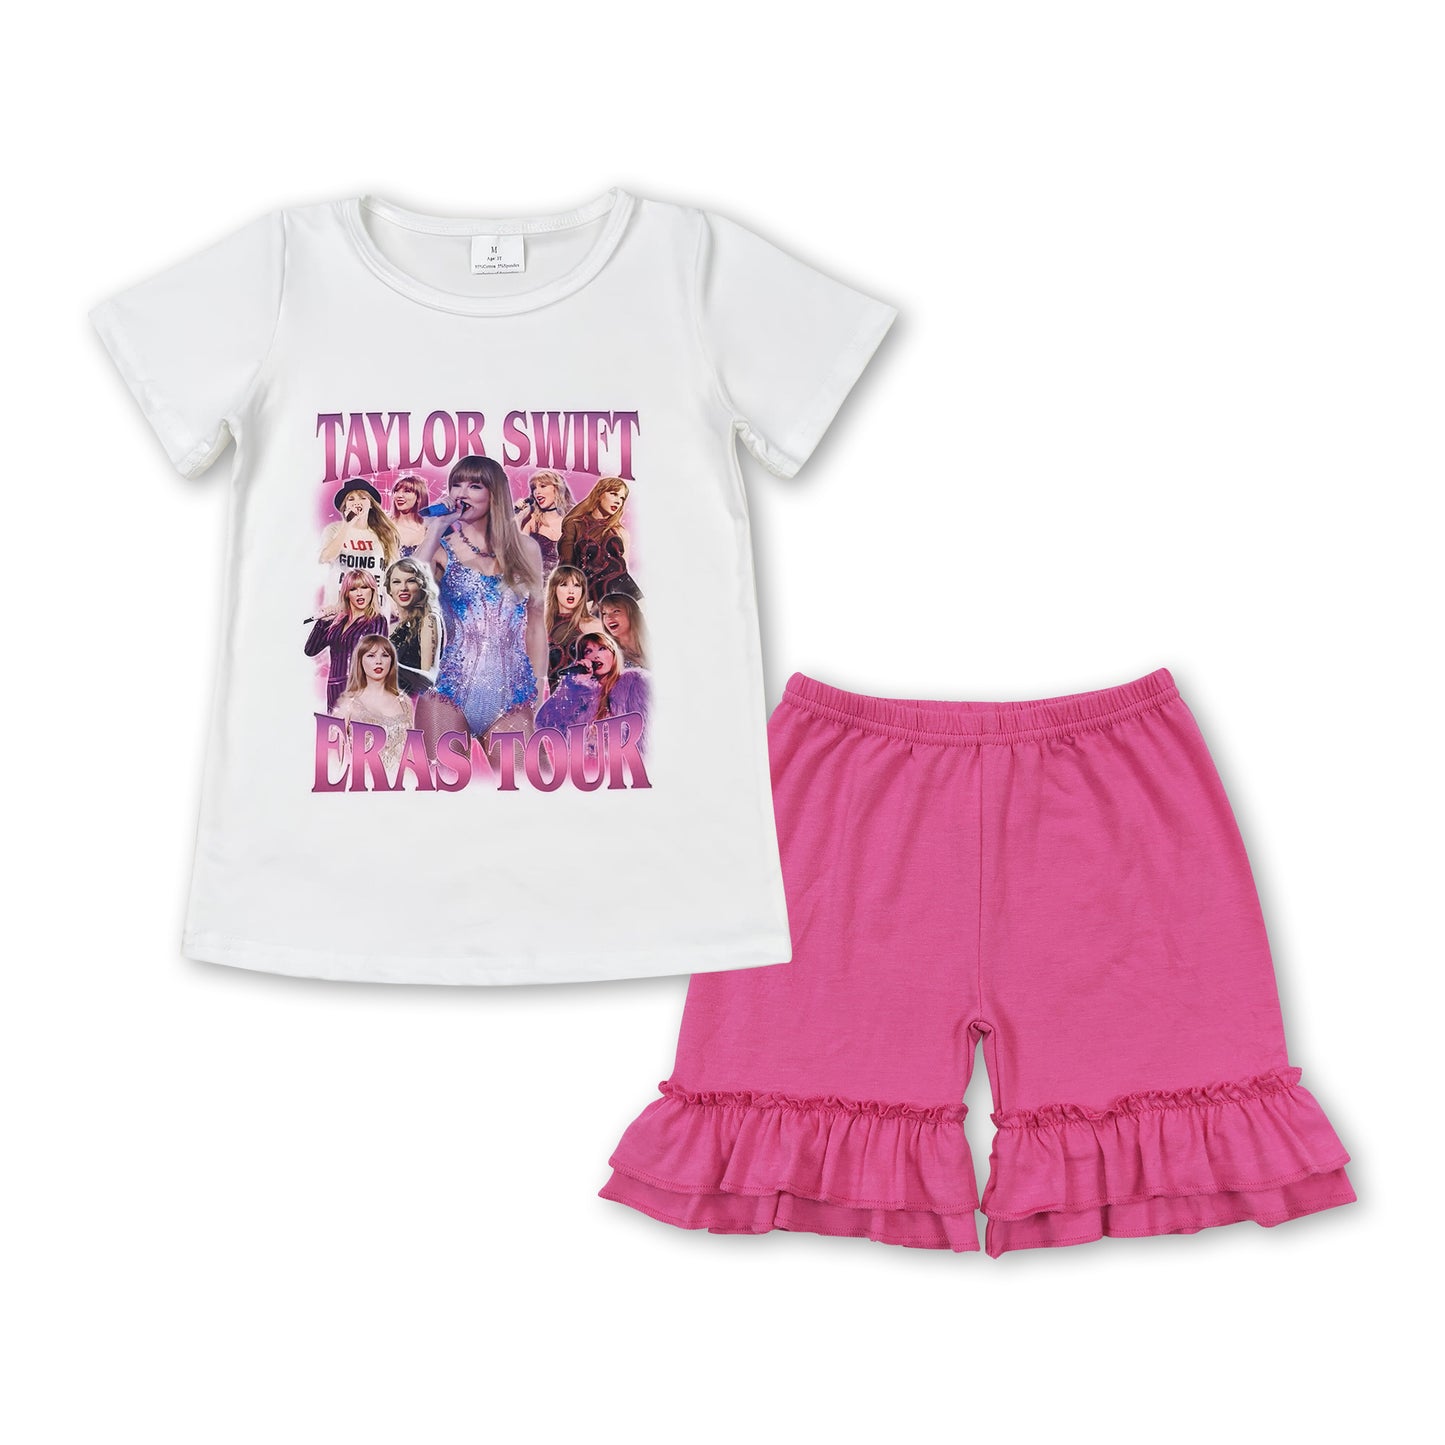 GSSO1391 Singer Swiftie White Top Hot Pink Shorts Girls Summer Clothes Set